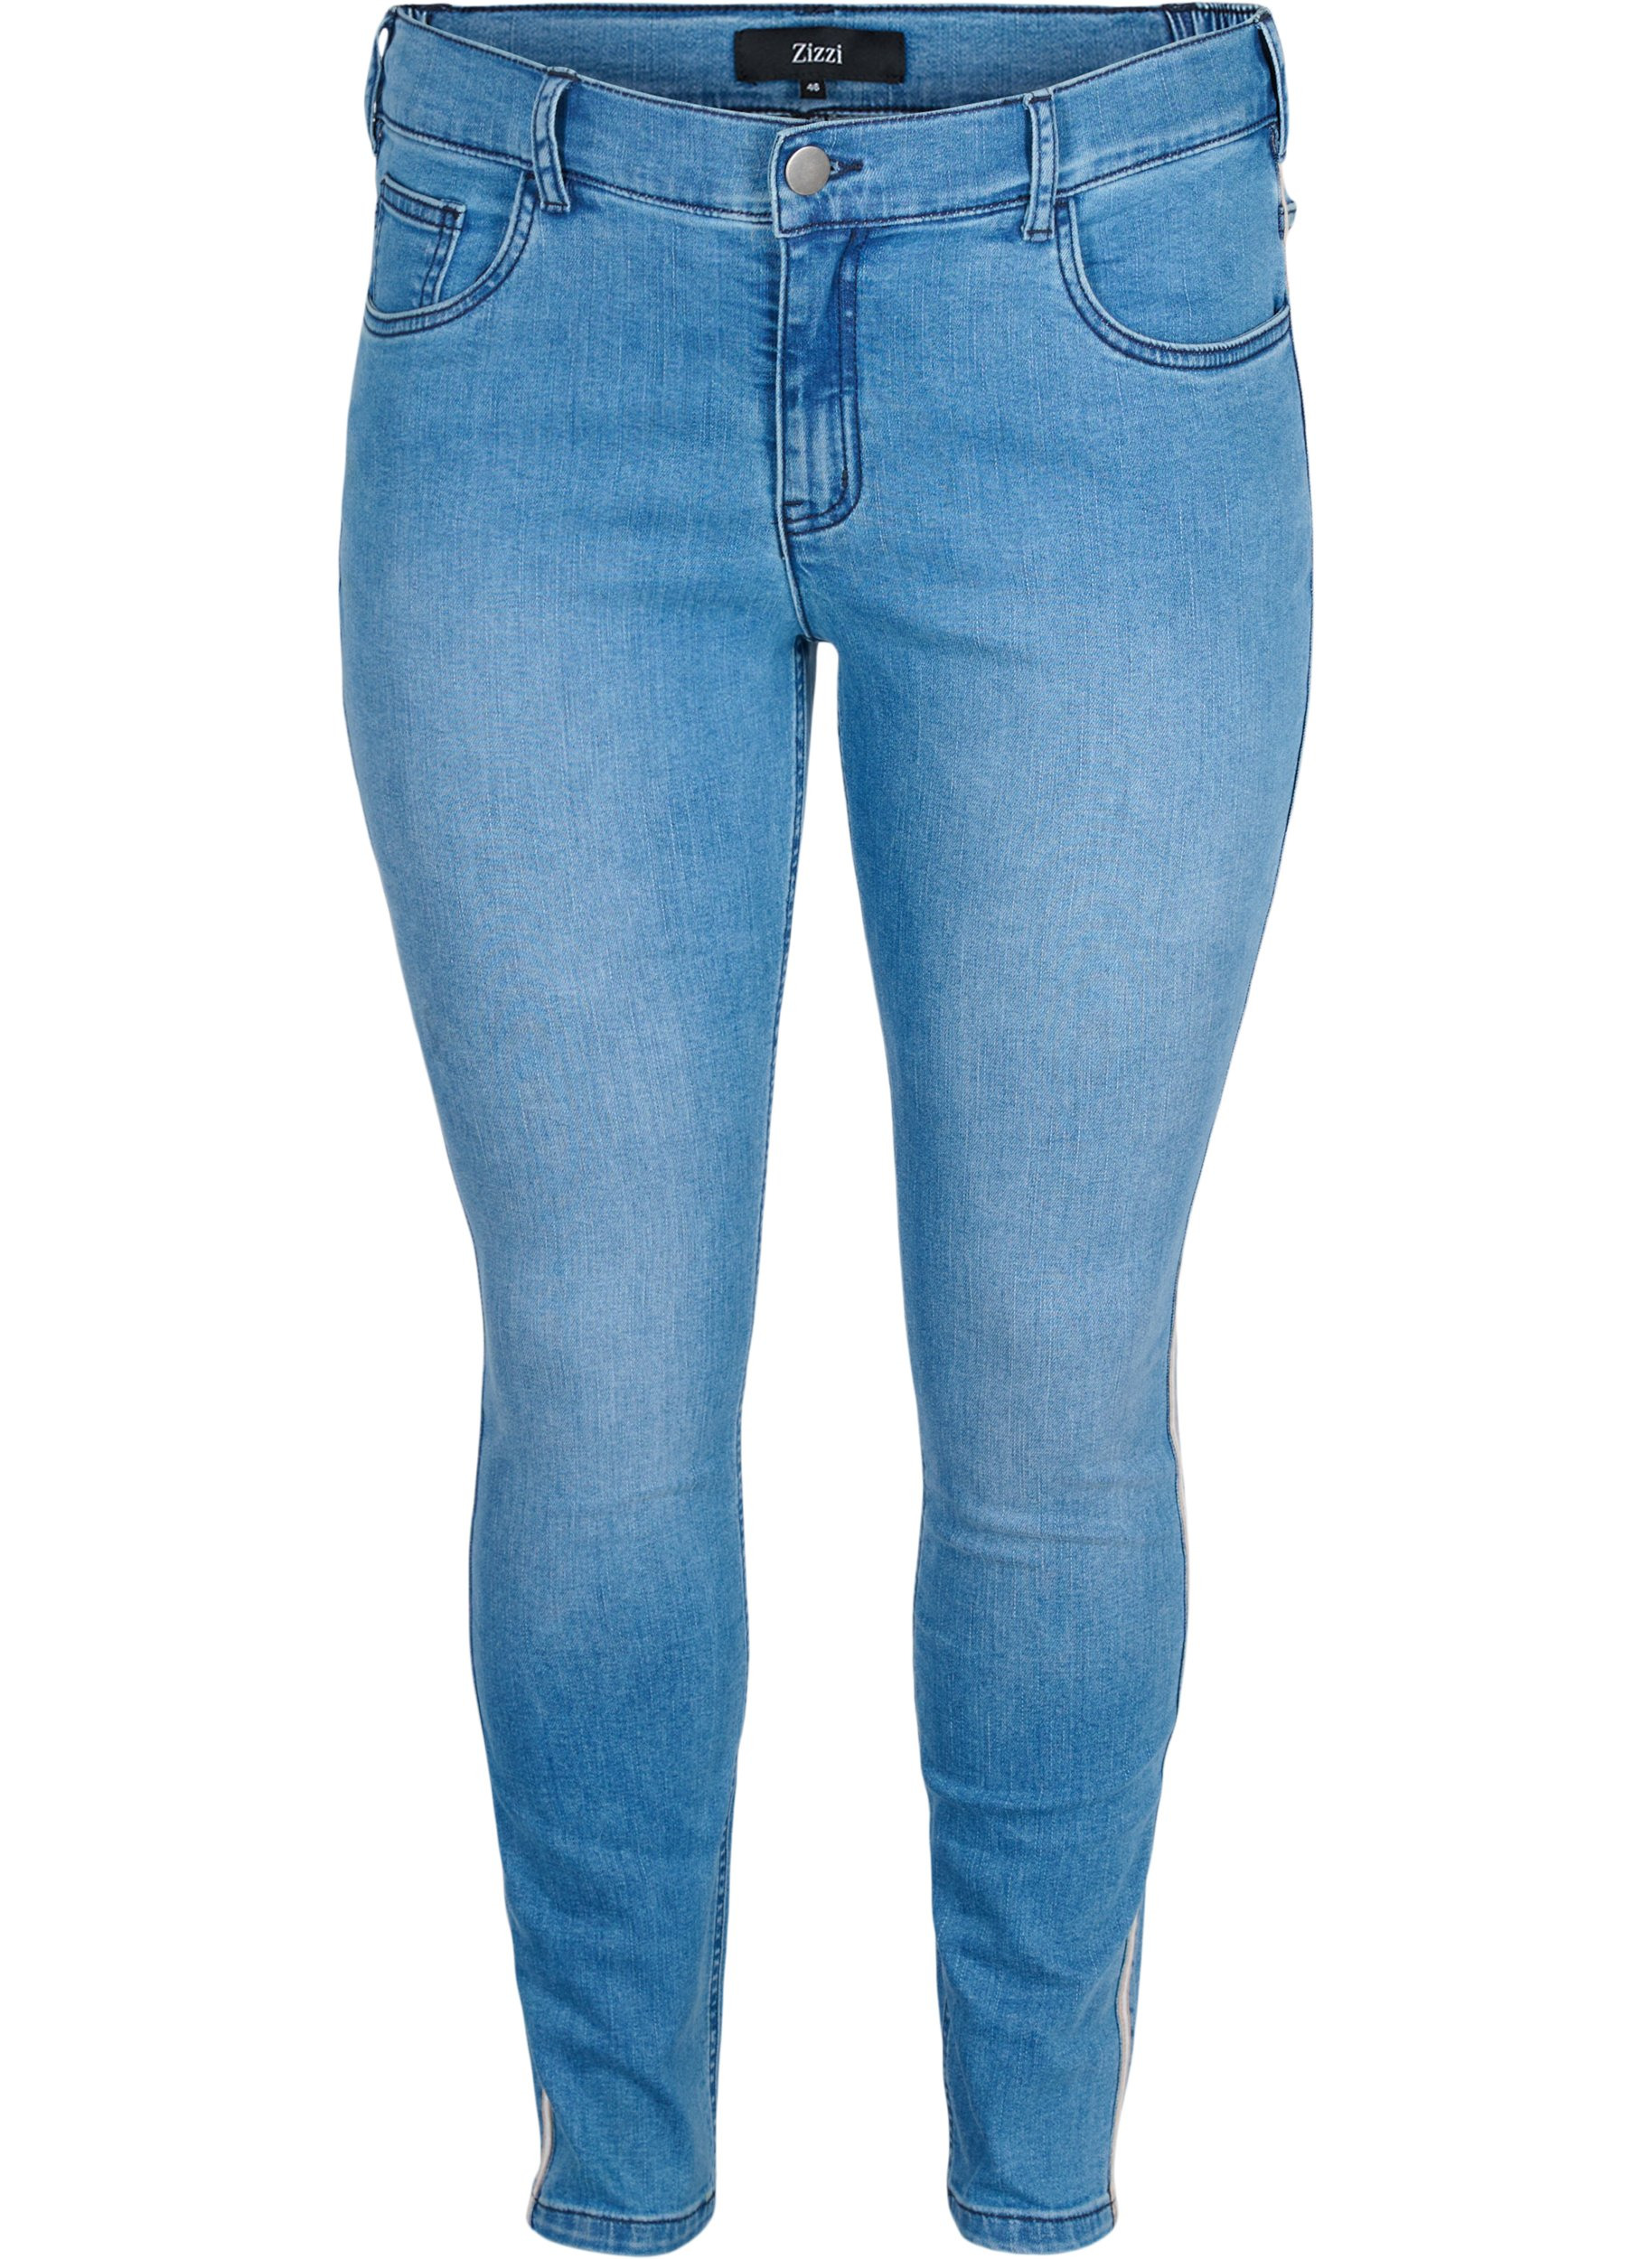 Cropped Sanna jeans med stribe i siden , Light blue denim